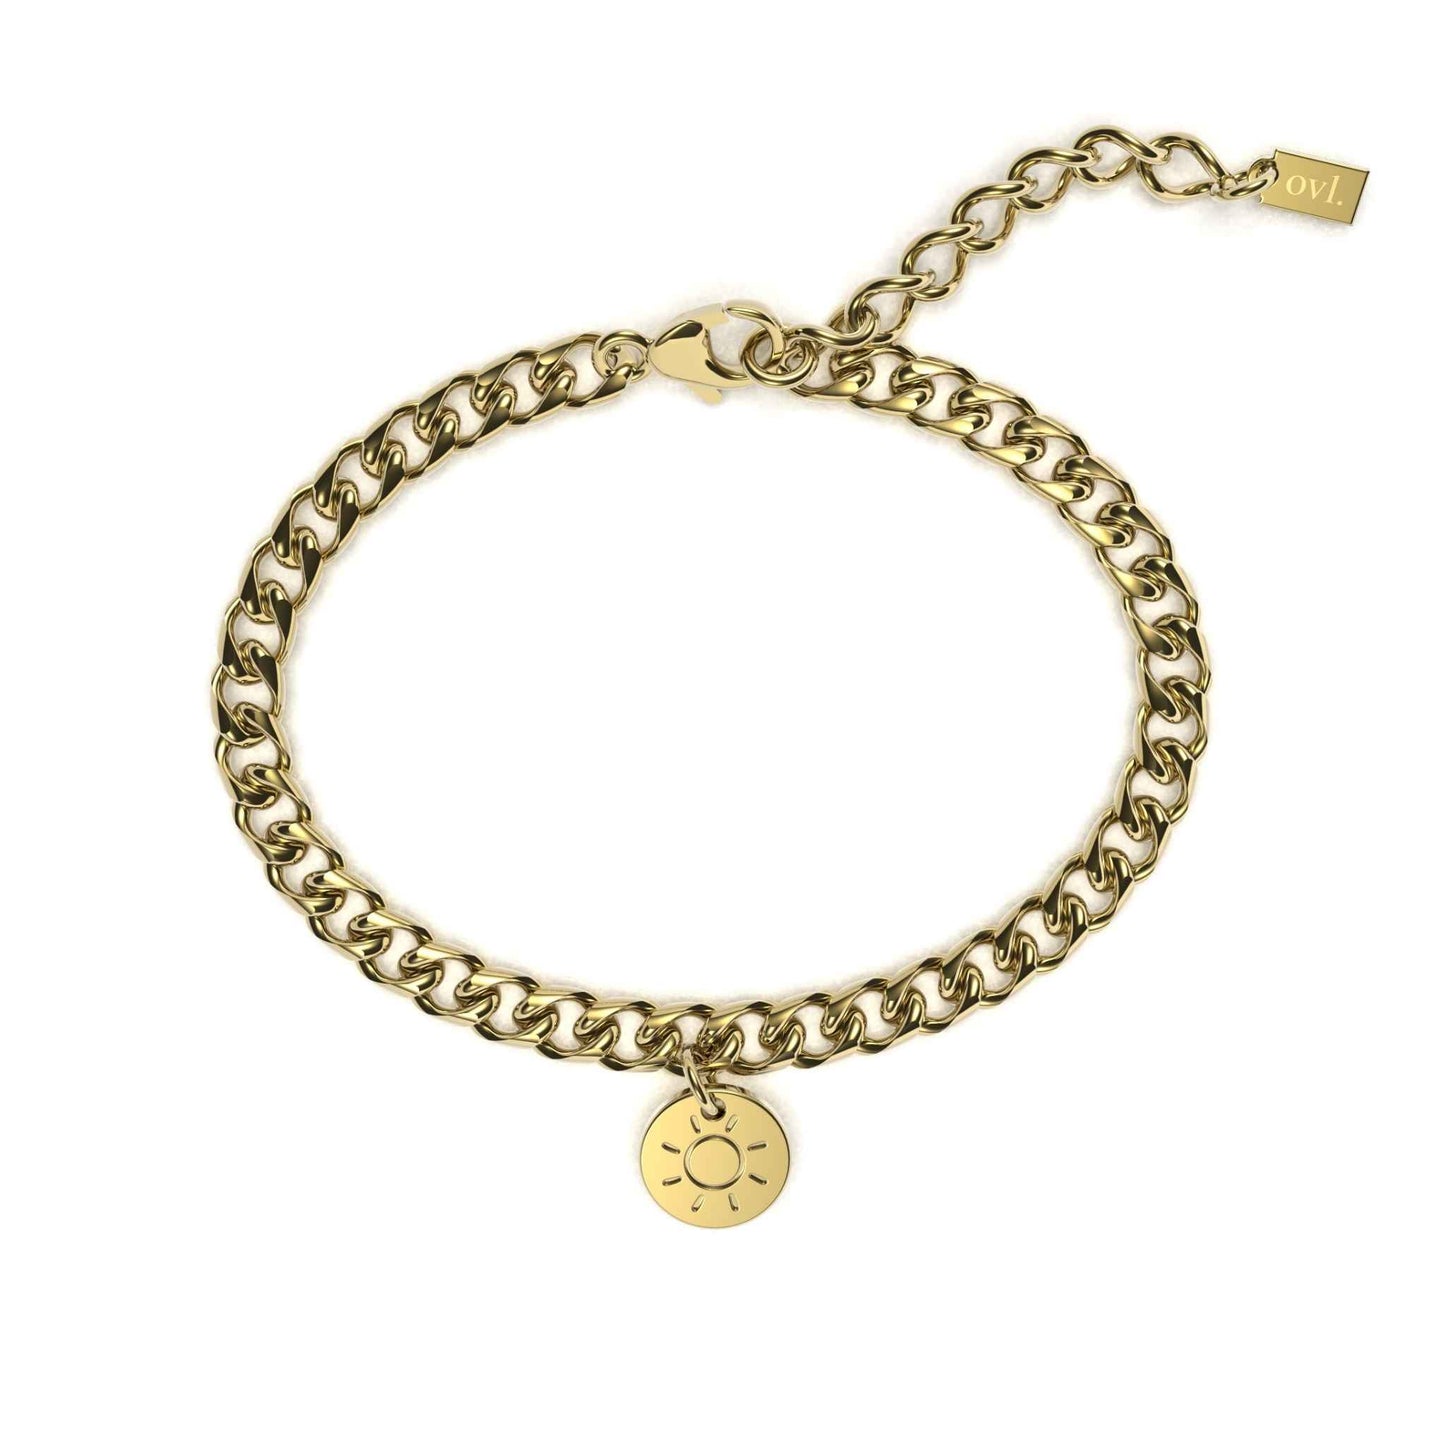 Copper Chain Bracelet | Chain Bracelet | The Ovl Collection